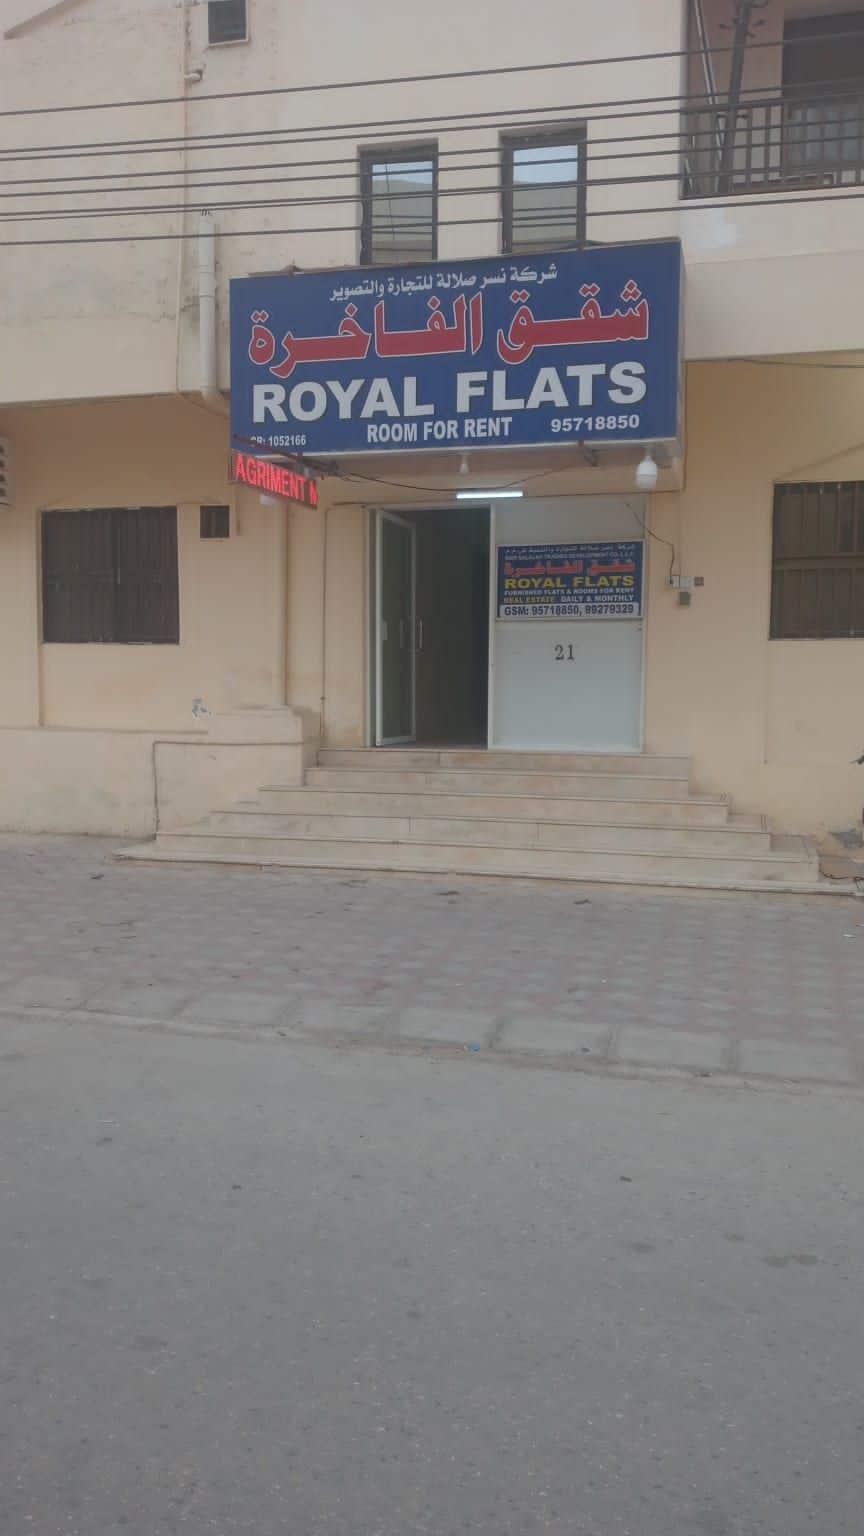 Royal flats&car rental